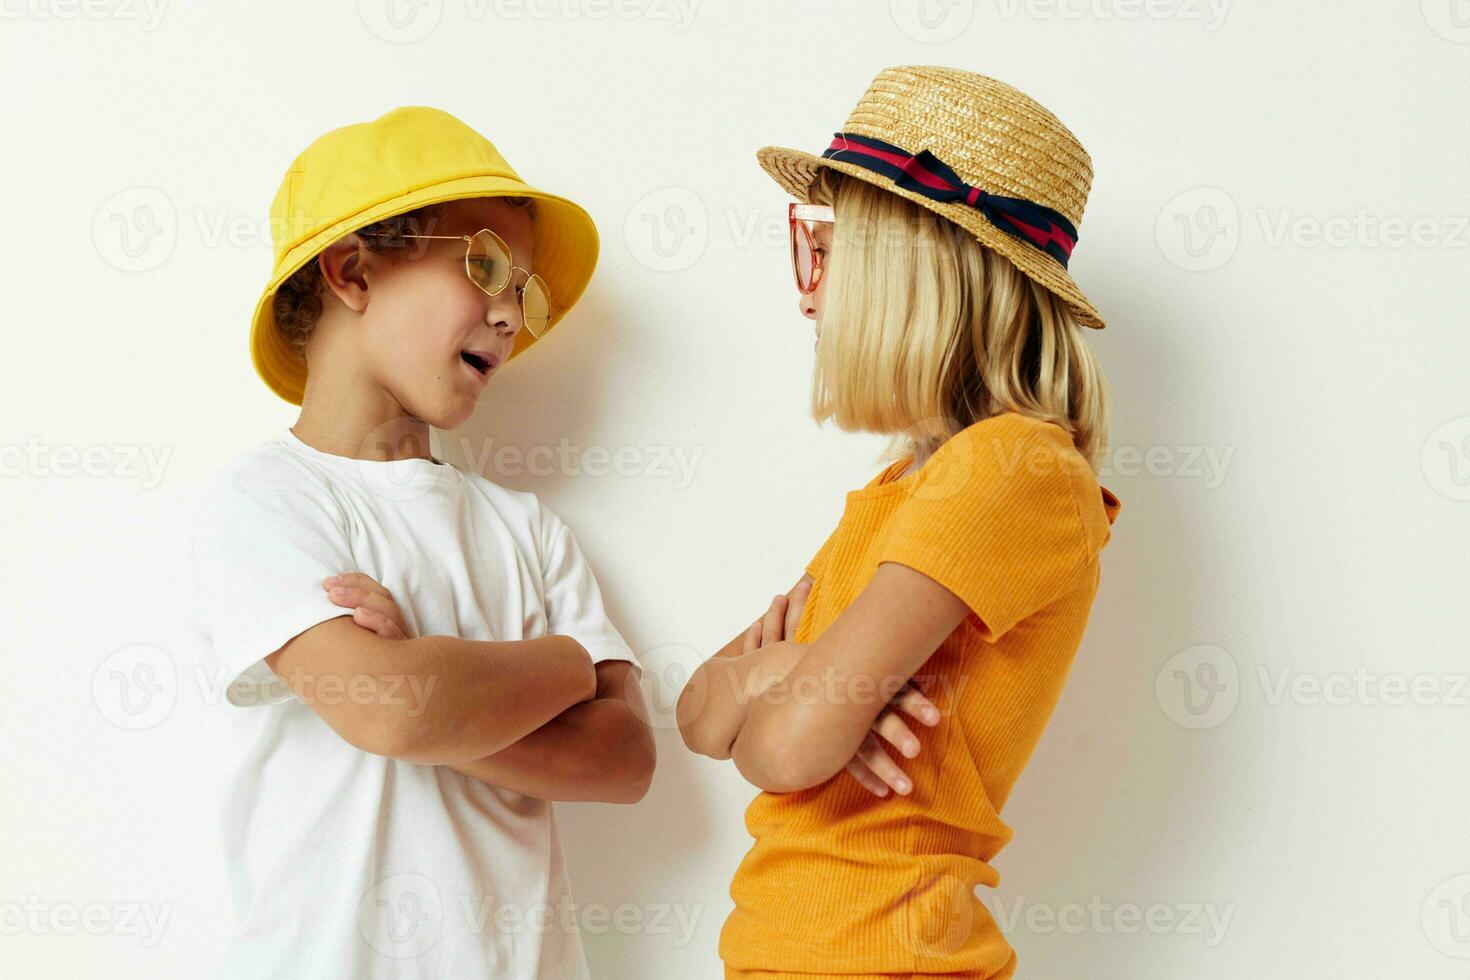 boy and girl wearing hats fashion glasses posing friendship fun photo